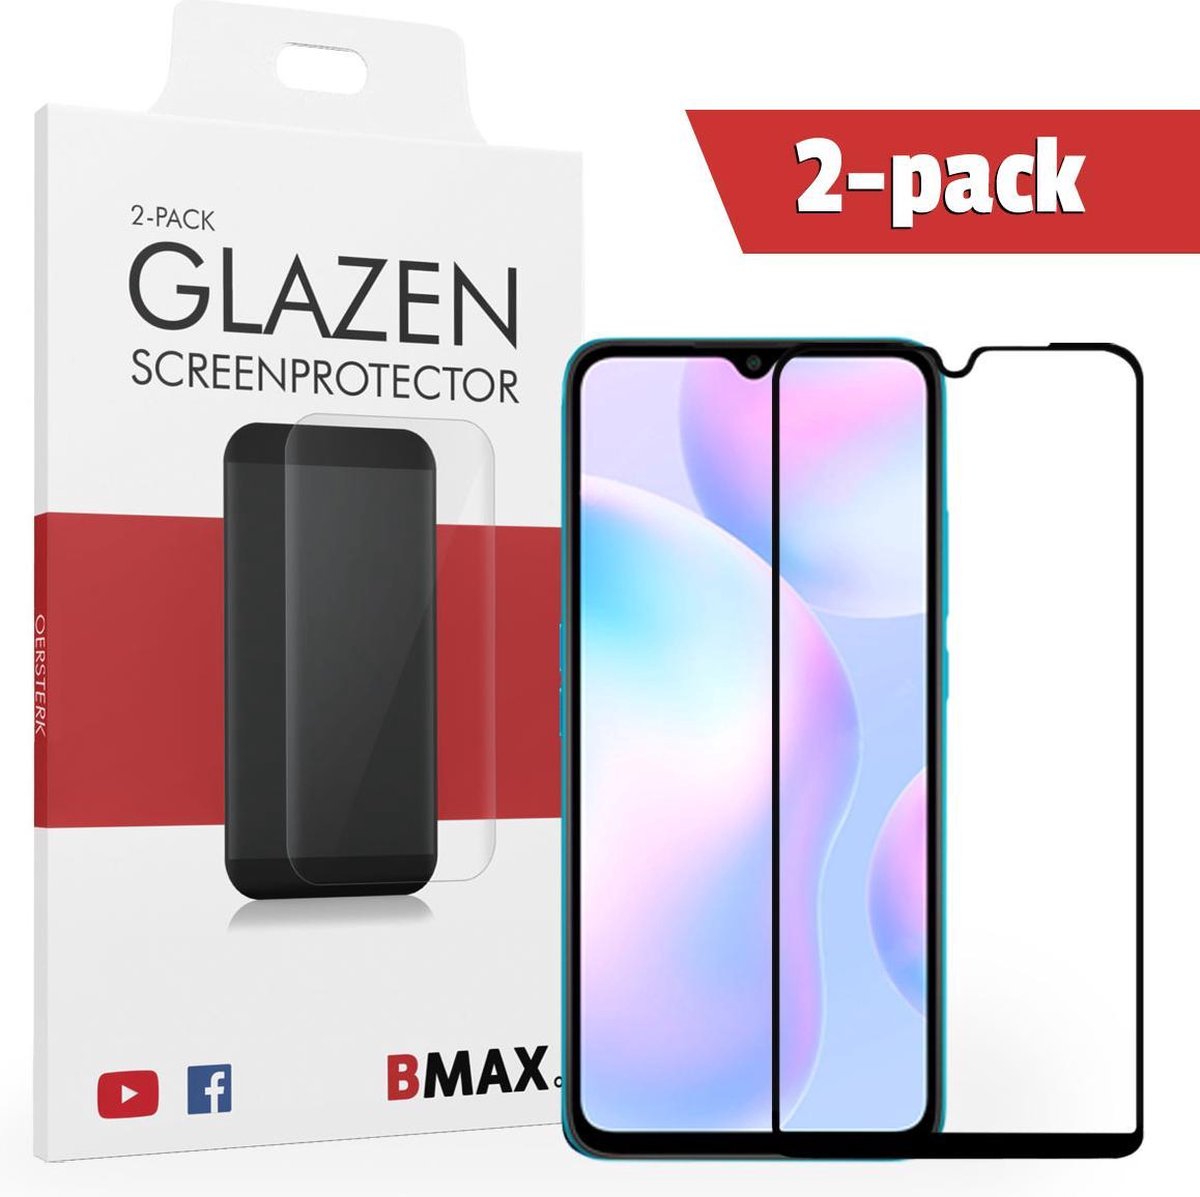 2-pack Bmax Xiaomi Redmi 9c Screenprotector - Glass - Full Cover 2.5d - Black/zwart